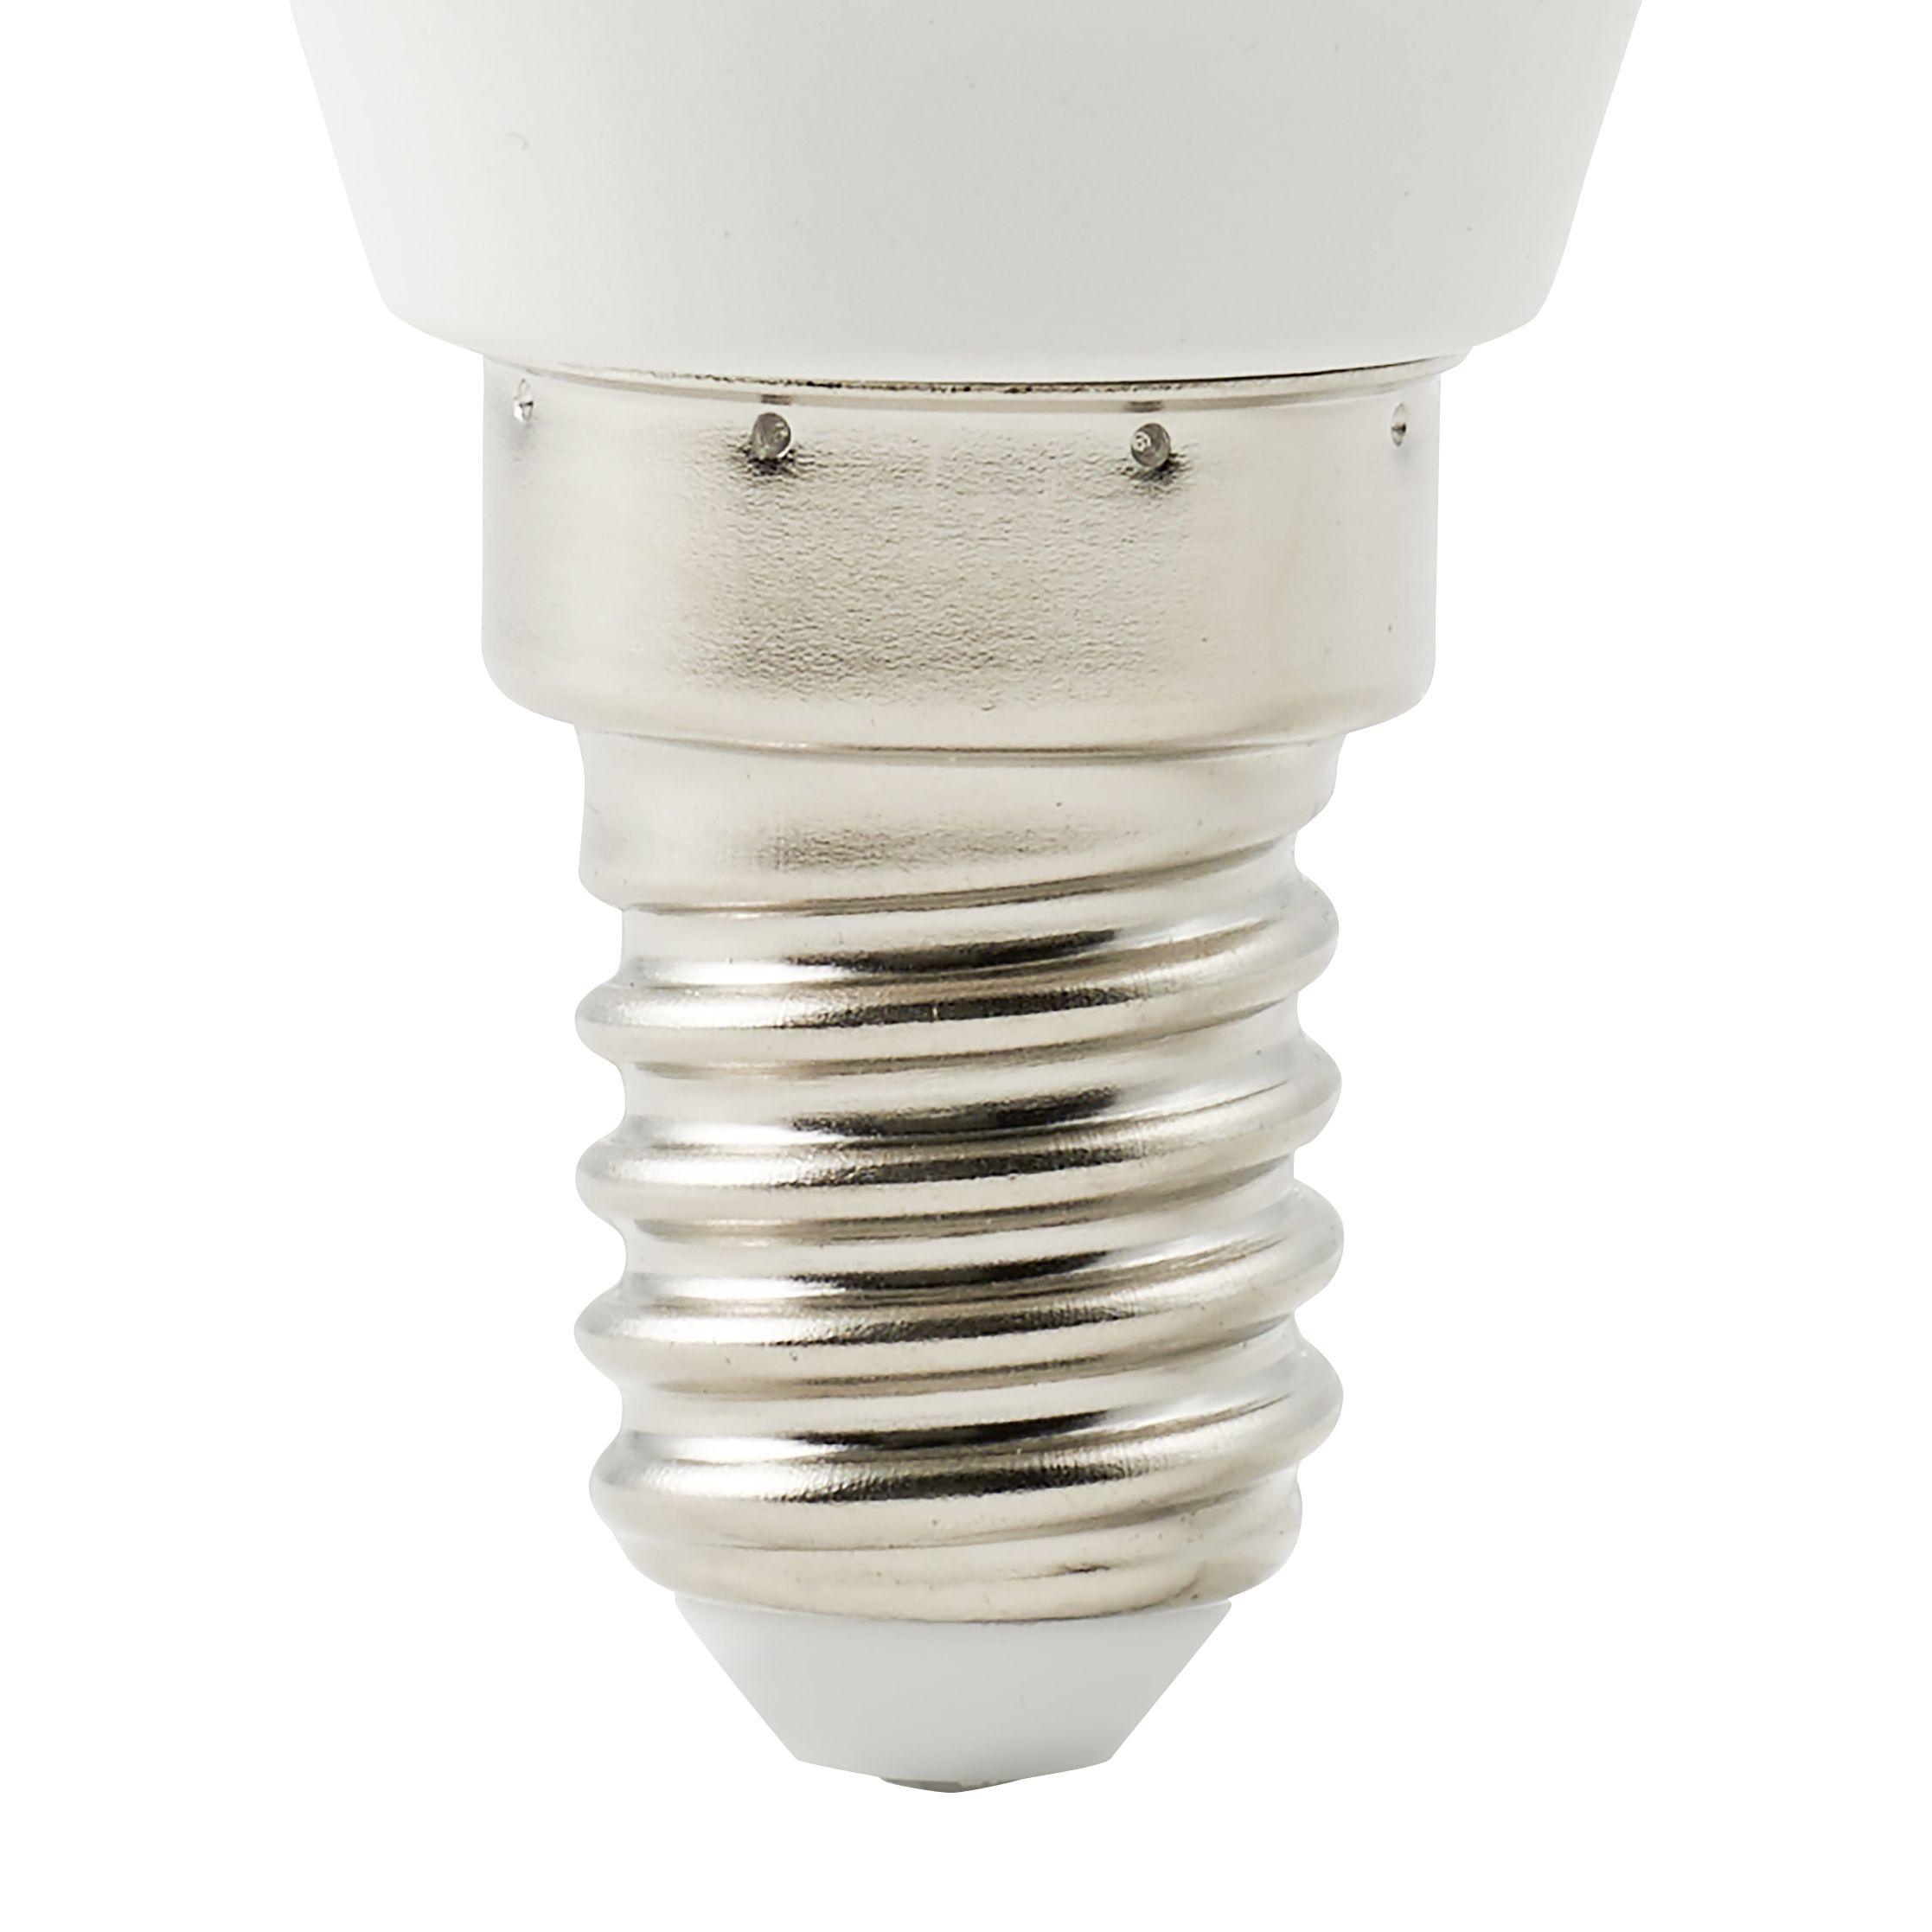 Diall E14 4.2W 470lm Frosted Mini globe Warm white LED Light bulb